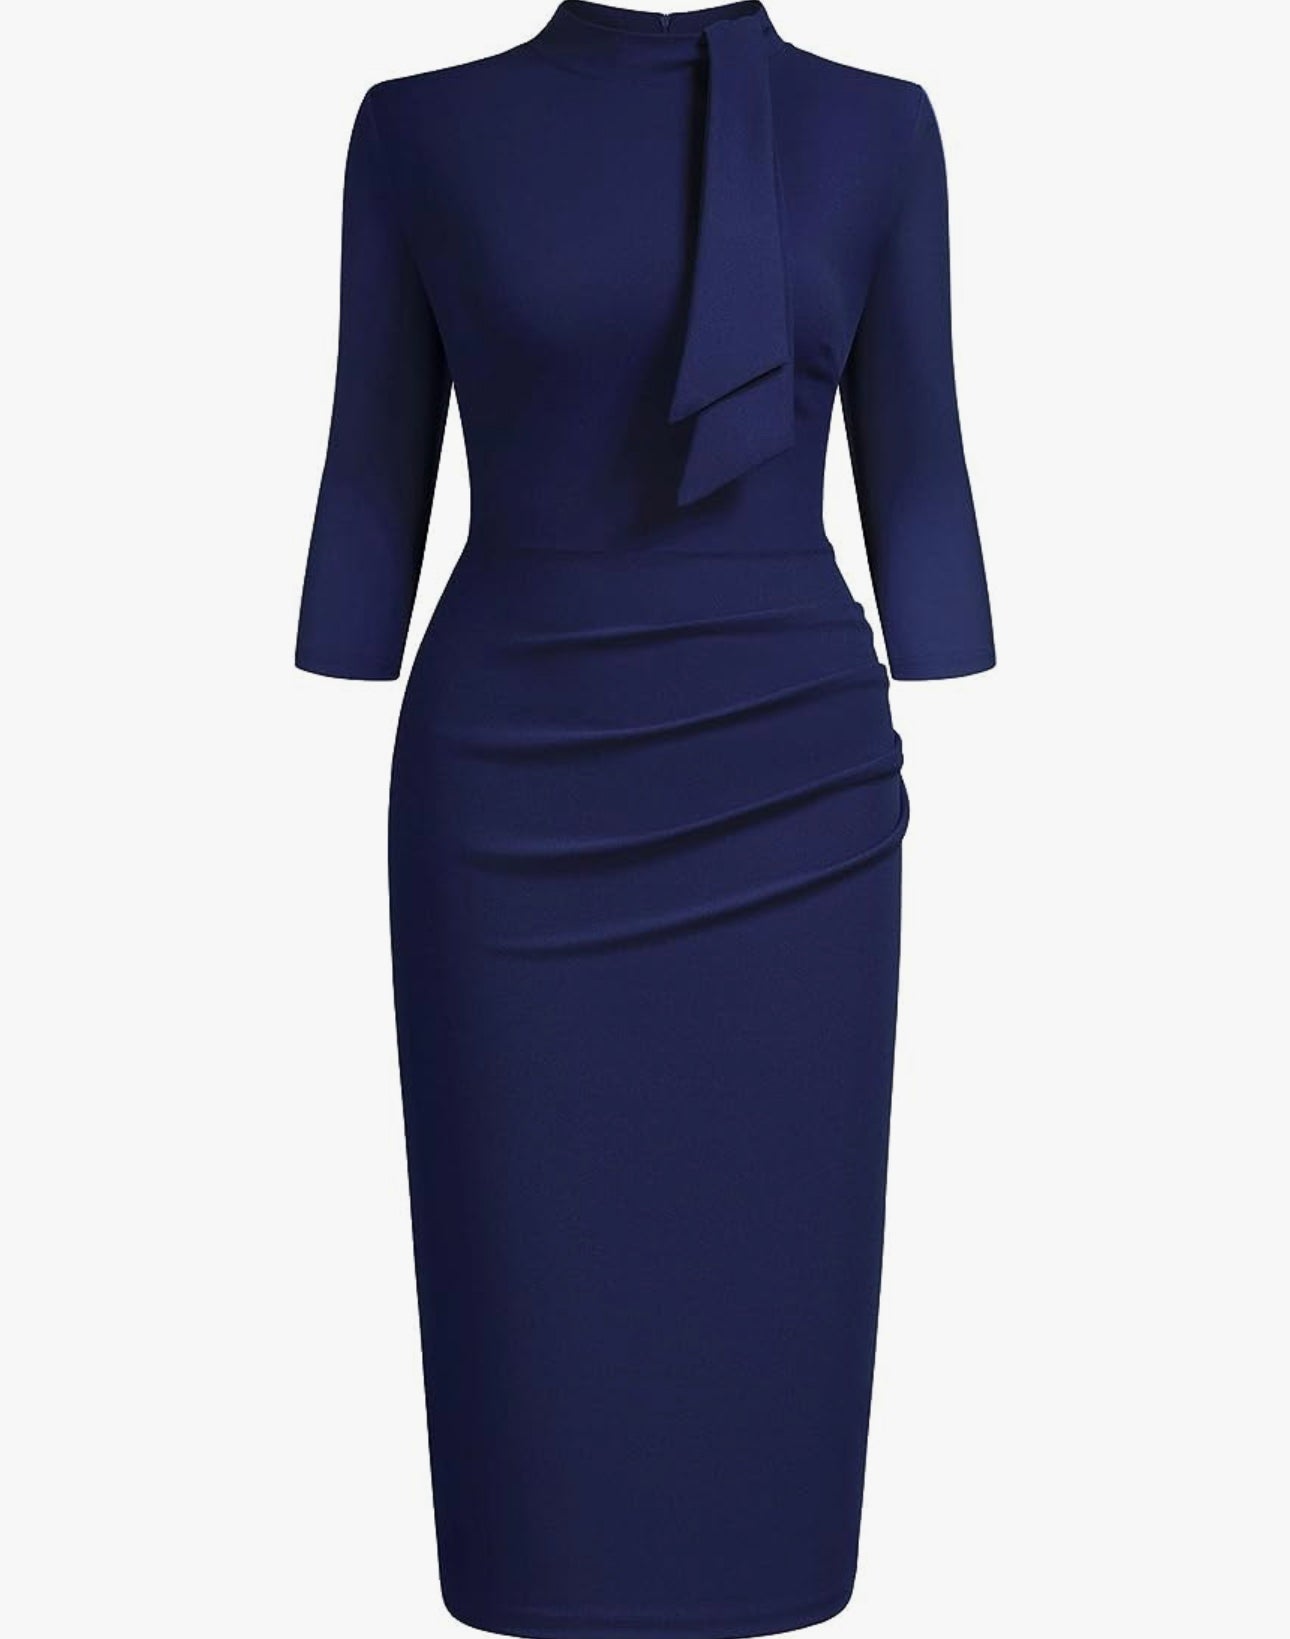 Vintage Inspired Half Collar Dress, US Sizes Small - XXLarge (NAVY BLUE DRESS)